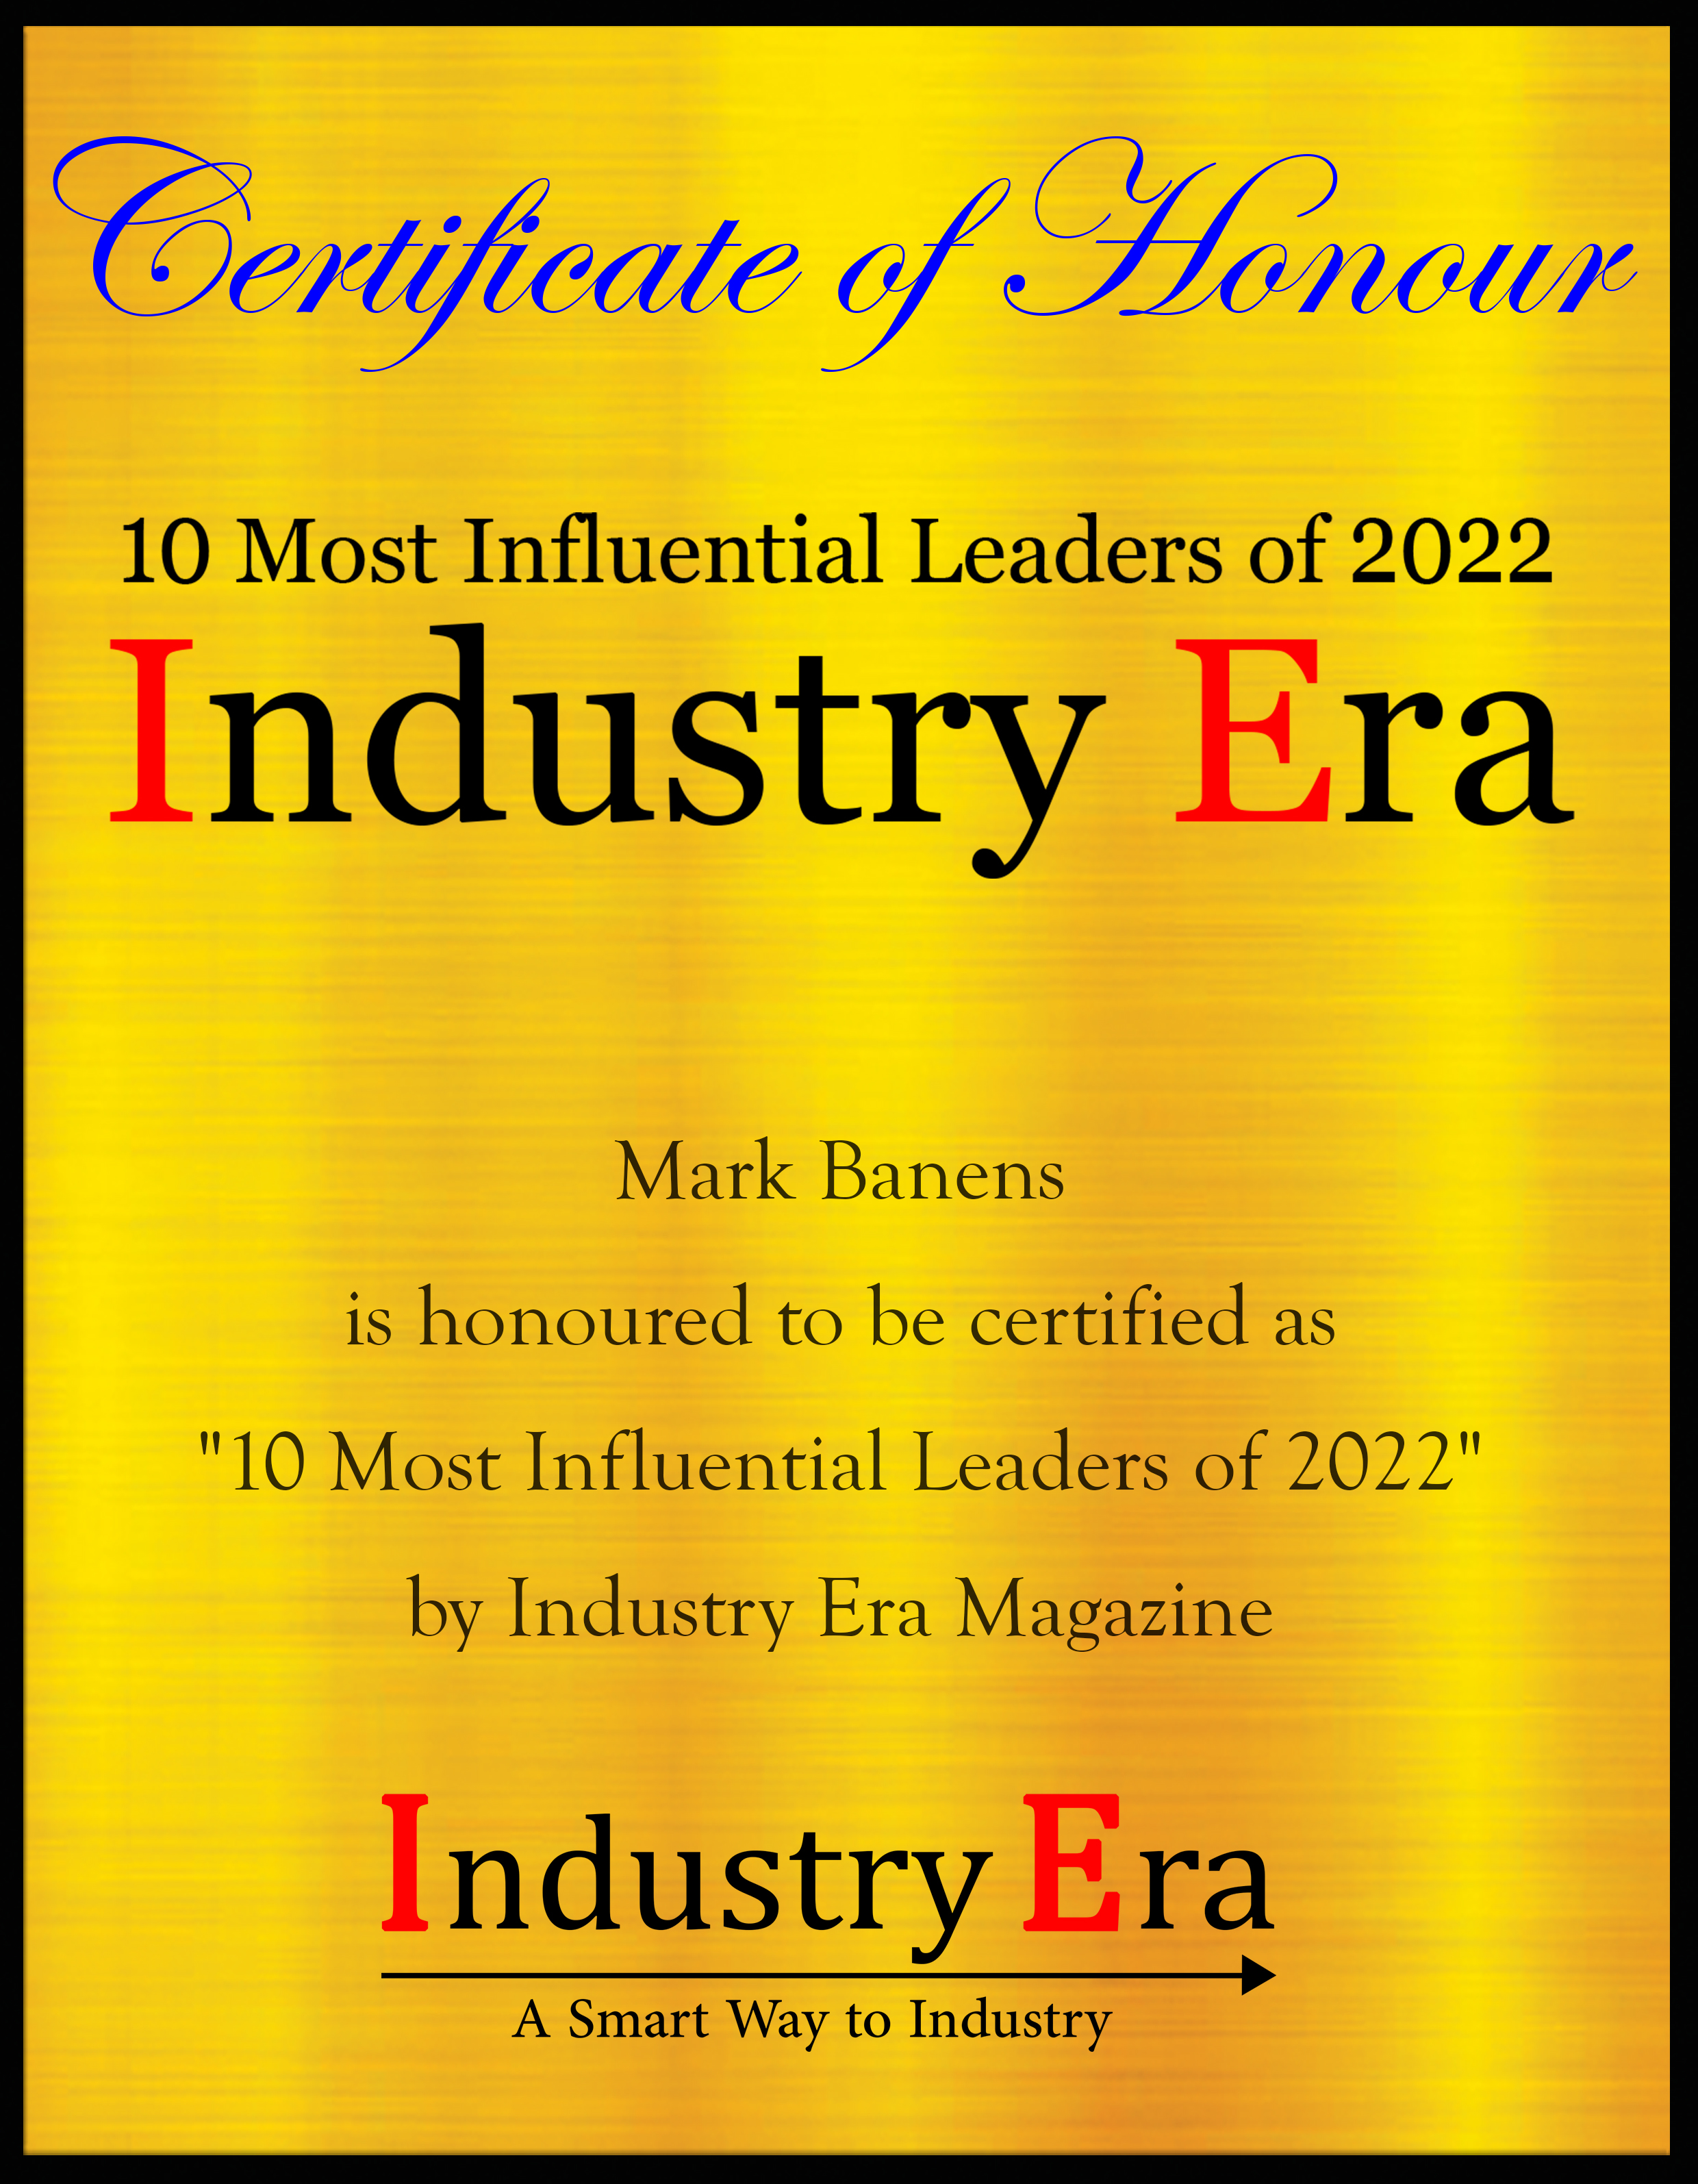 Mark Banens, CEO of BIZITSS Certificate